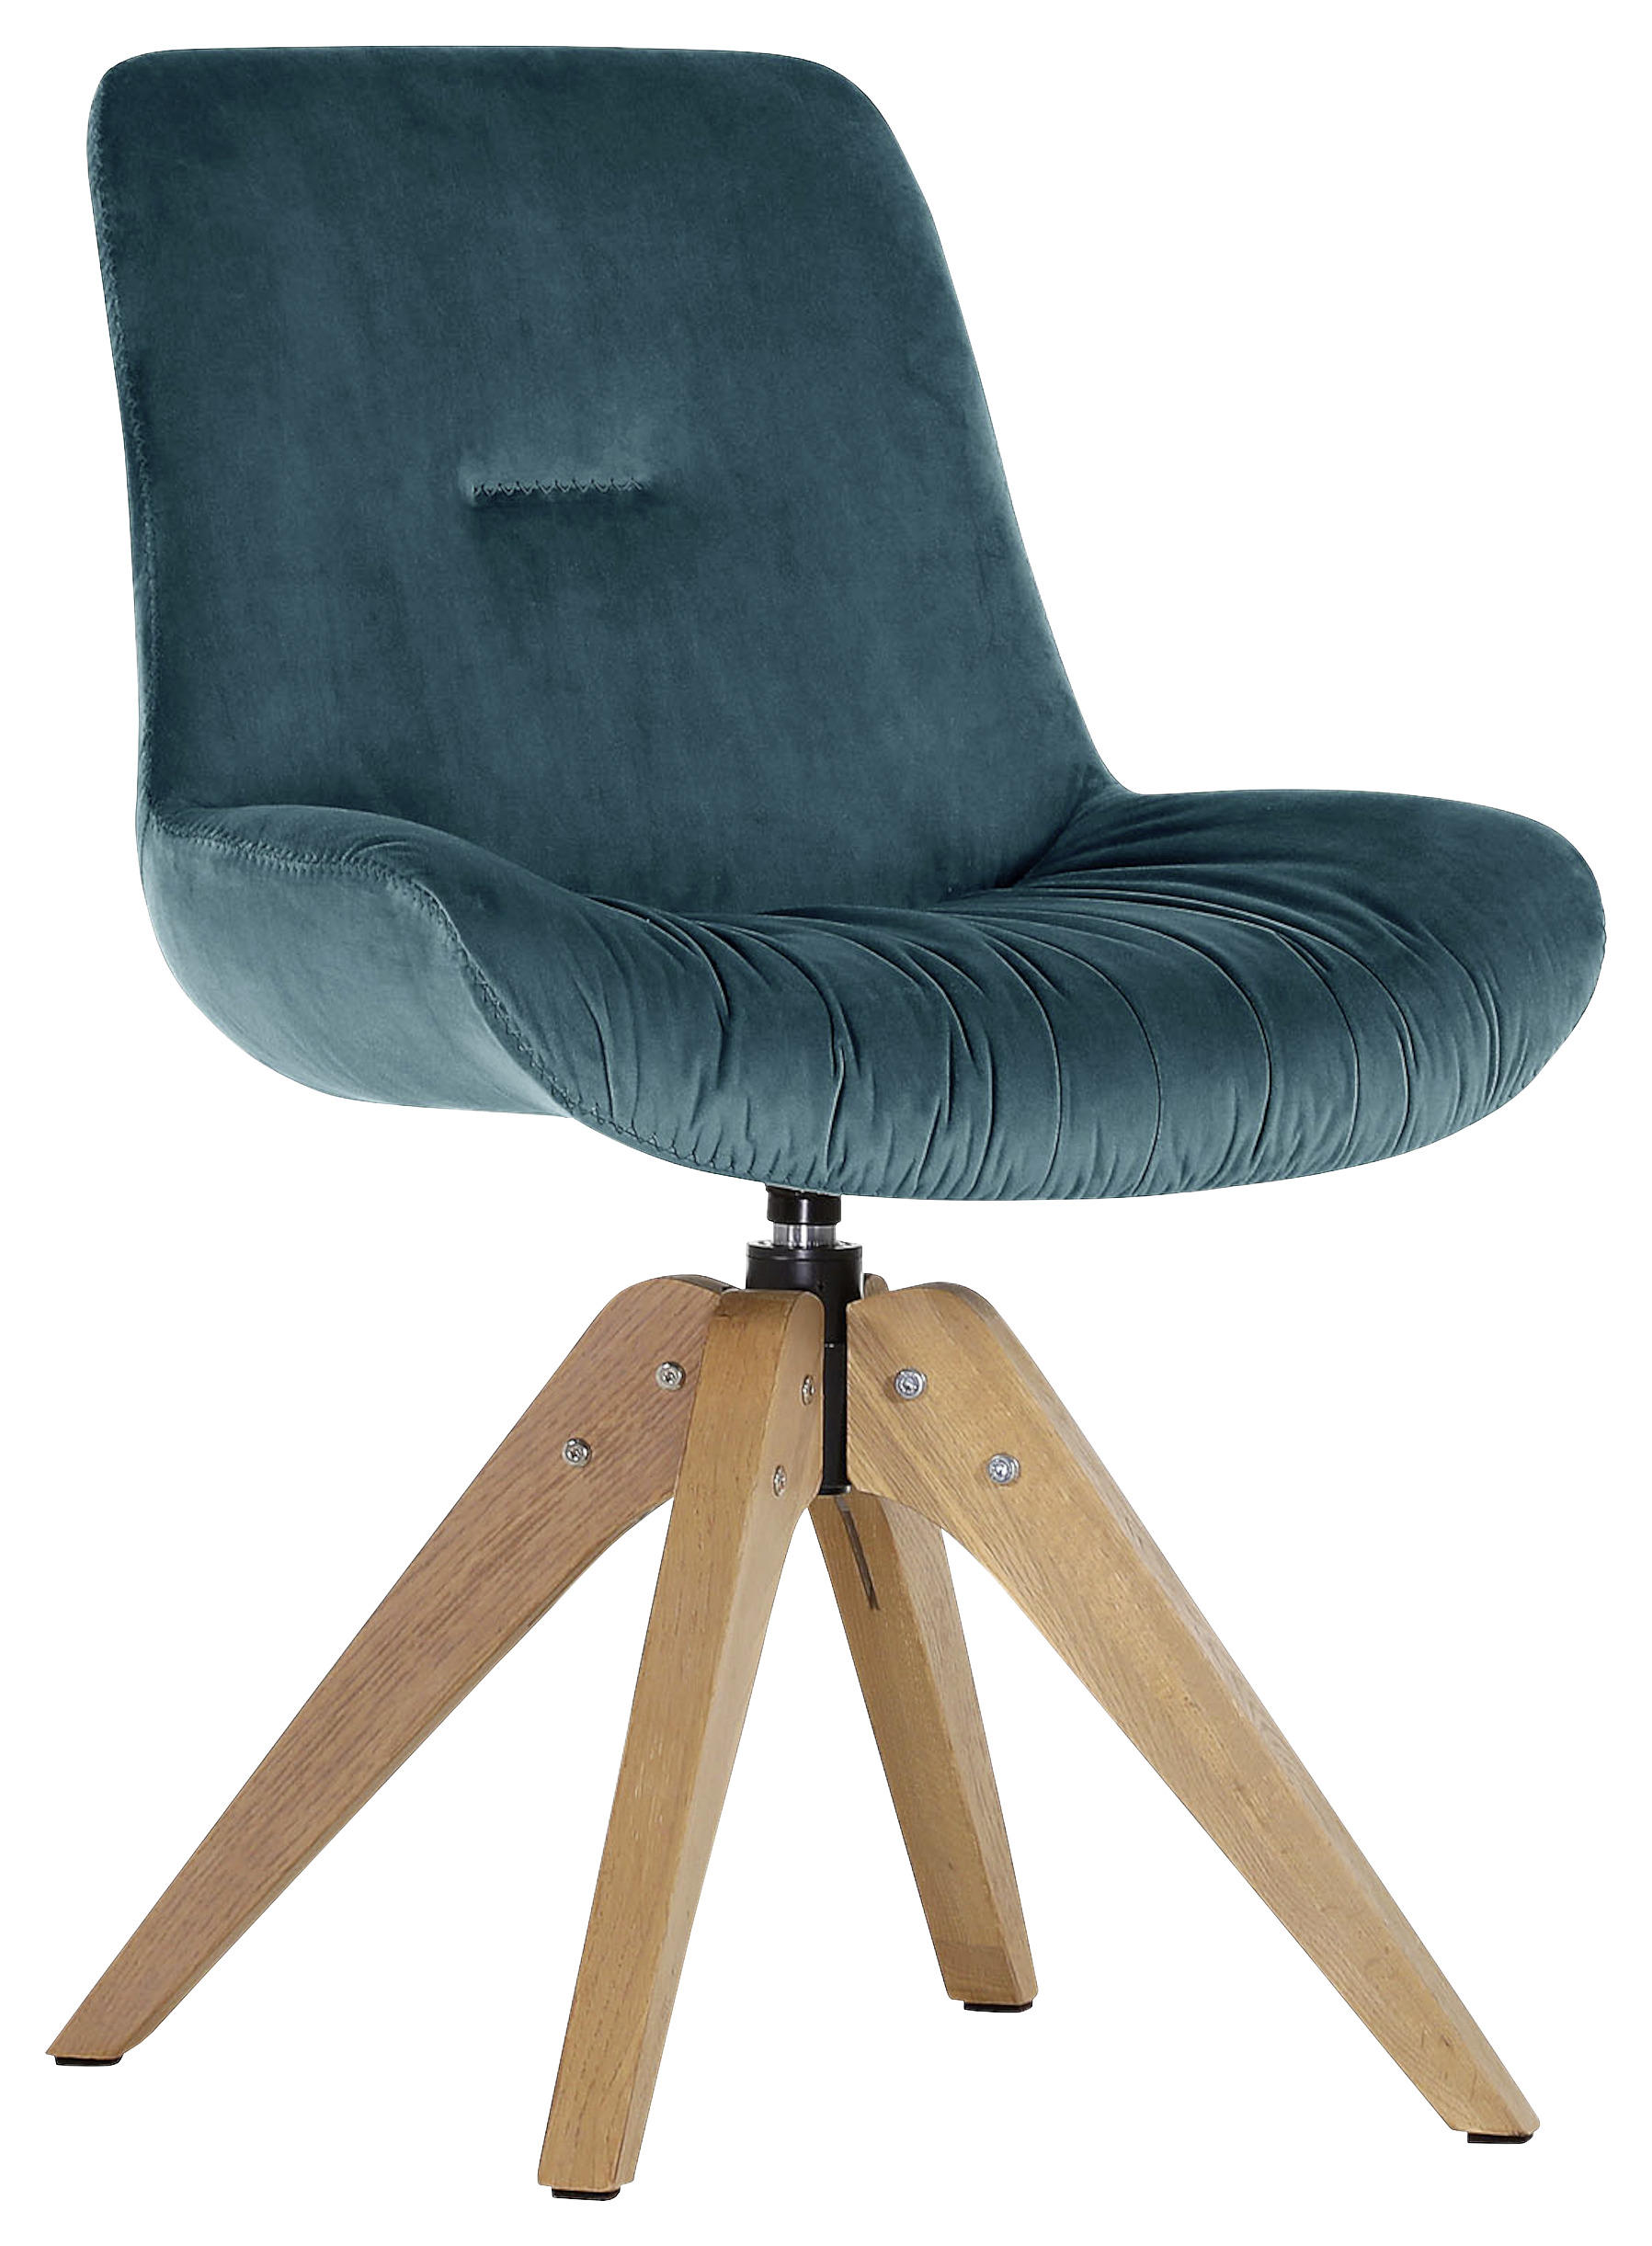 STUHL Flachgewebe Smaragdgrün Sitzfläche 360° drehbar  - Smaragdgrün/Eichefarben, Design, Holz/Textil (55/84/60cm) - Linea Natura